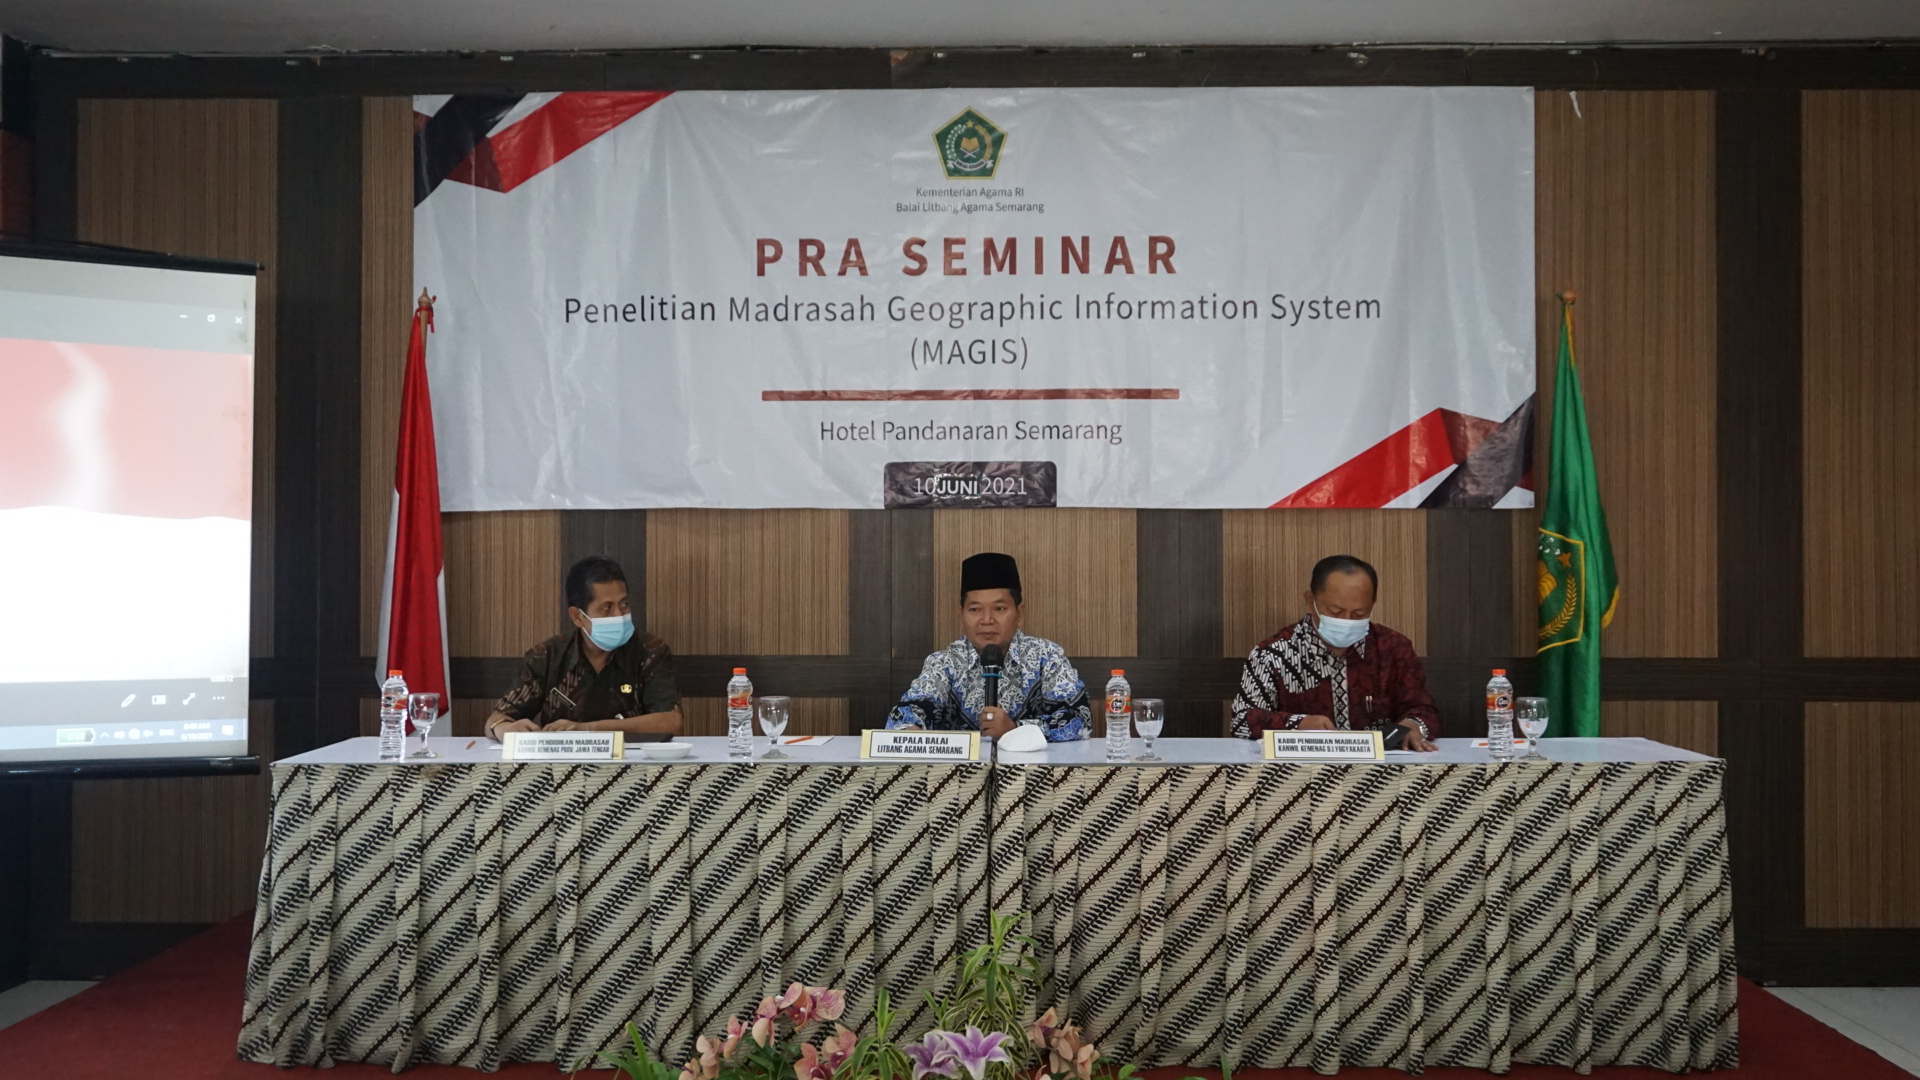 Madrasah Geographic Information System (MAGIS) D.I. Yogyakarta